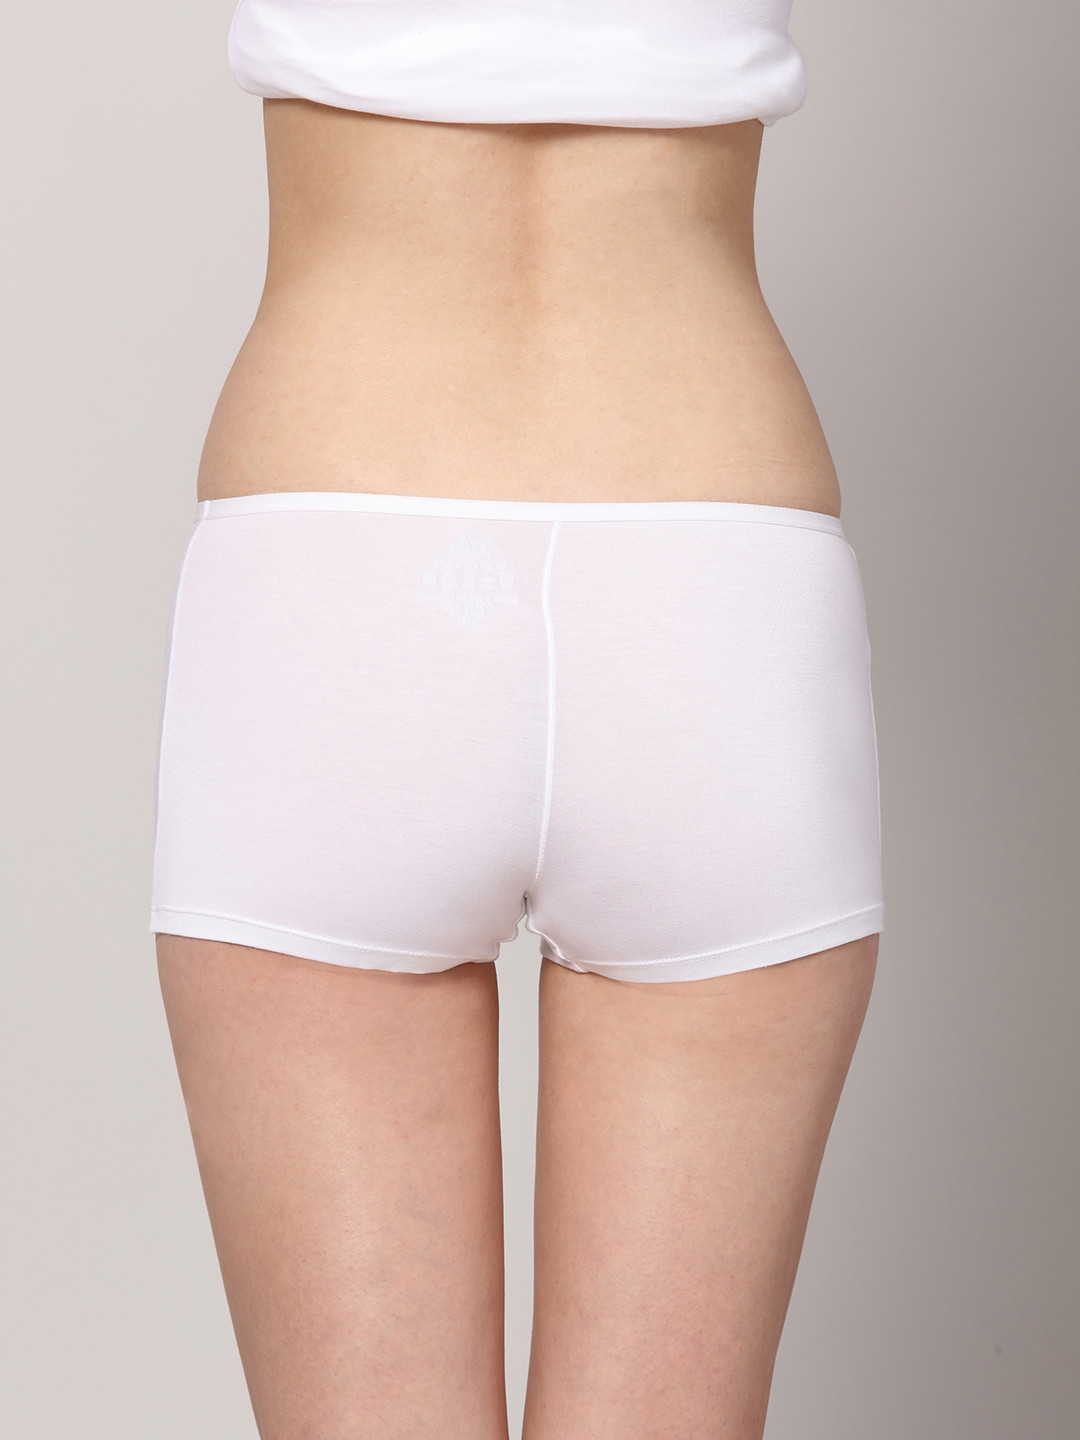 AshleyandAlvis Women's Panties Micro Modal, Anti Bacterial, Skinny Soft, Premium Boyshorts -No Itching, Sweat Proof, Double In-seam Gusset